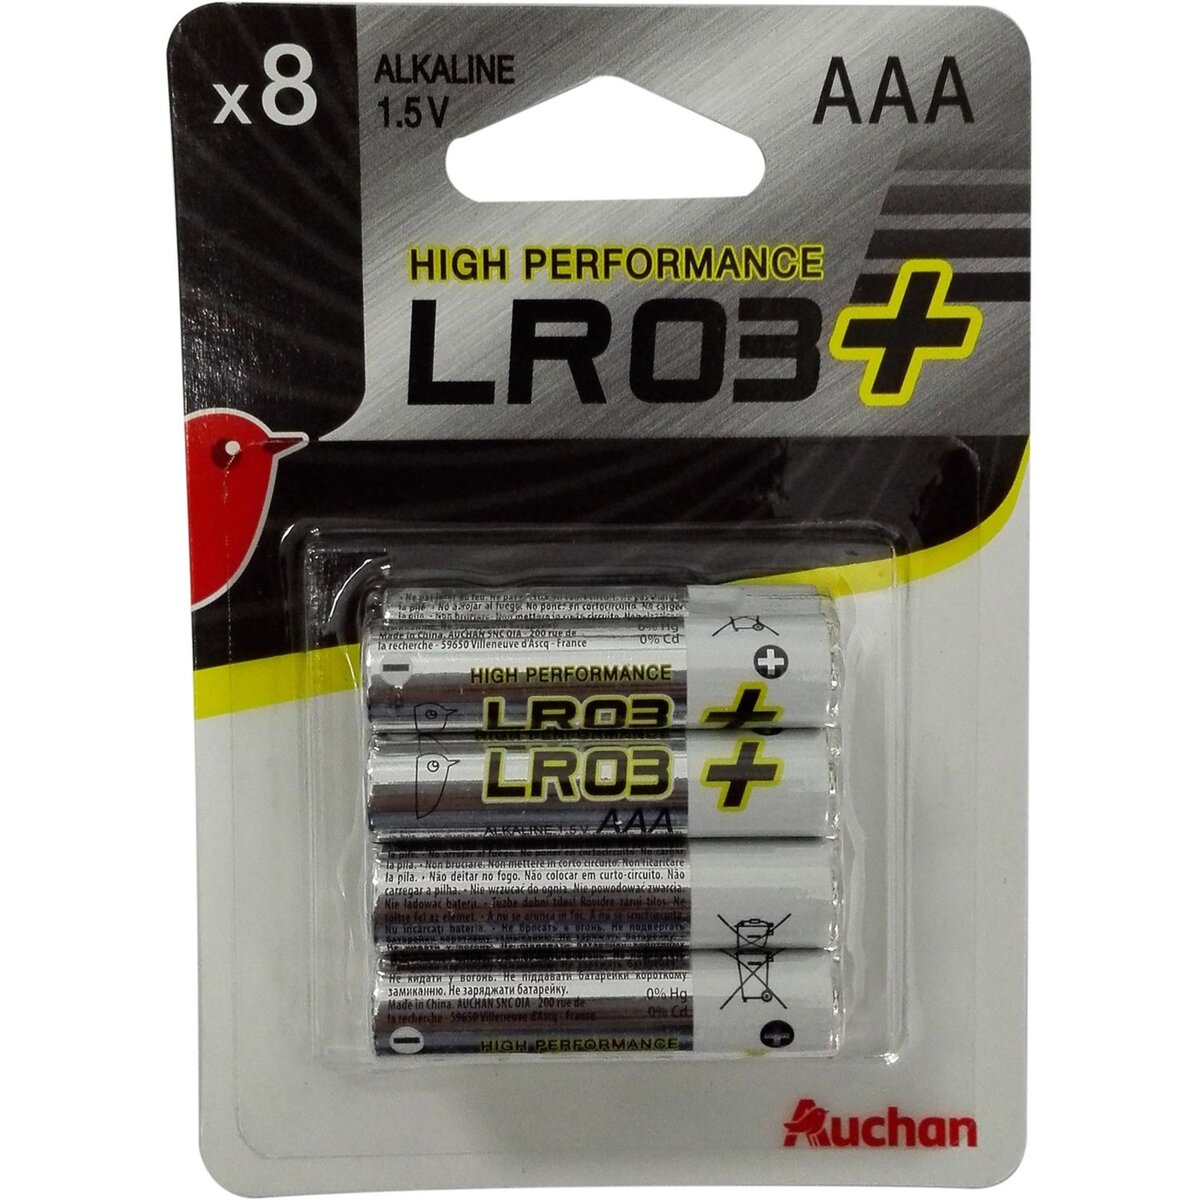 AUCHAN Auchan Piles AAA/LR03+ alcalines 1.5V high performance x8 8 pièces